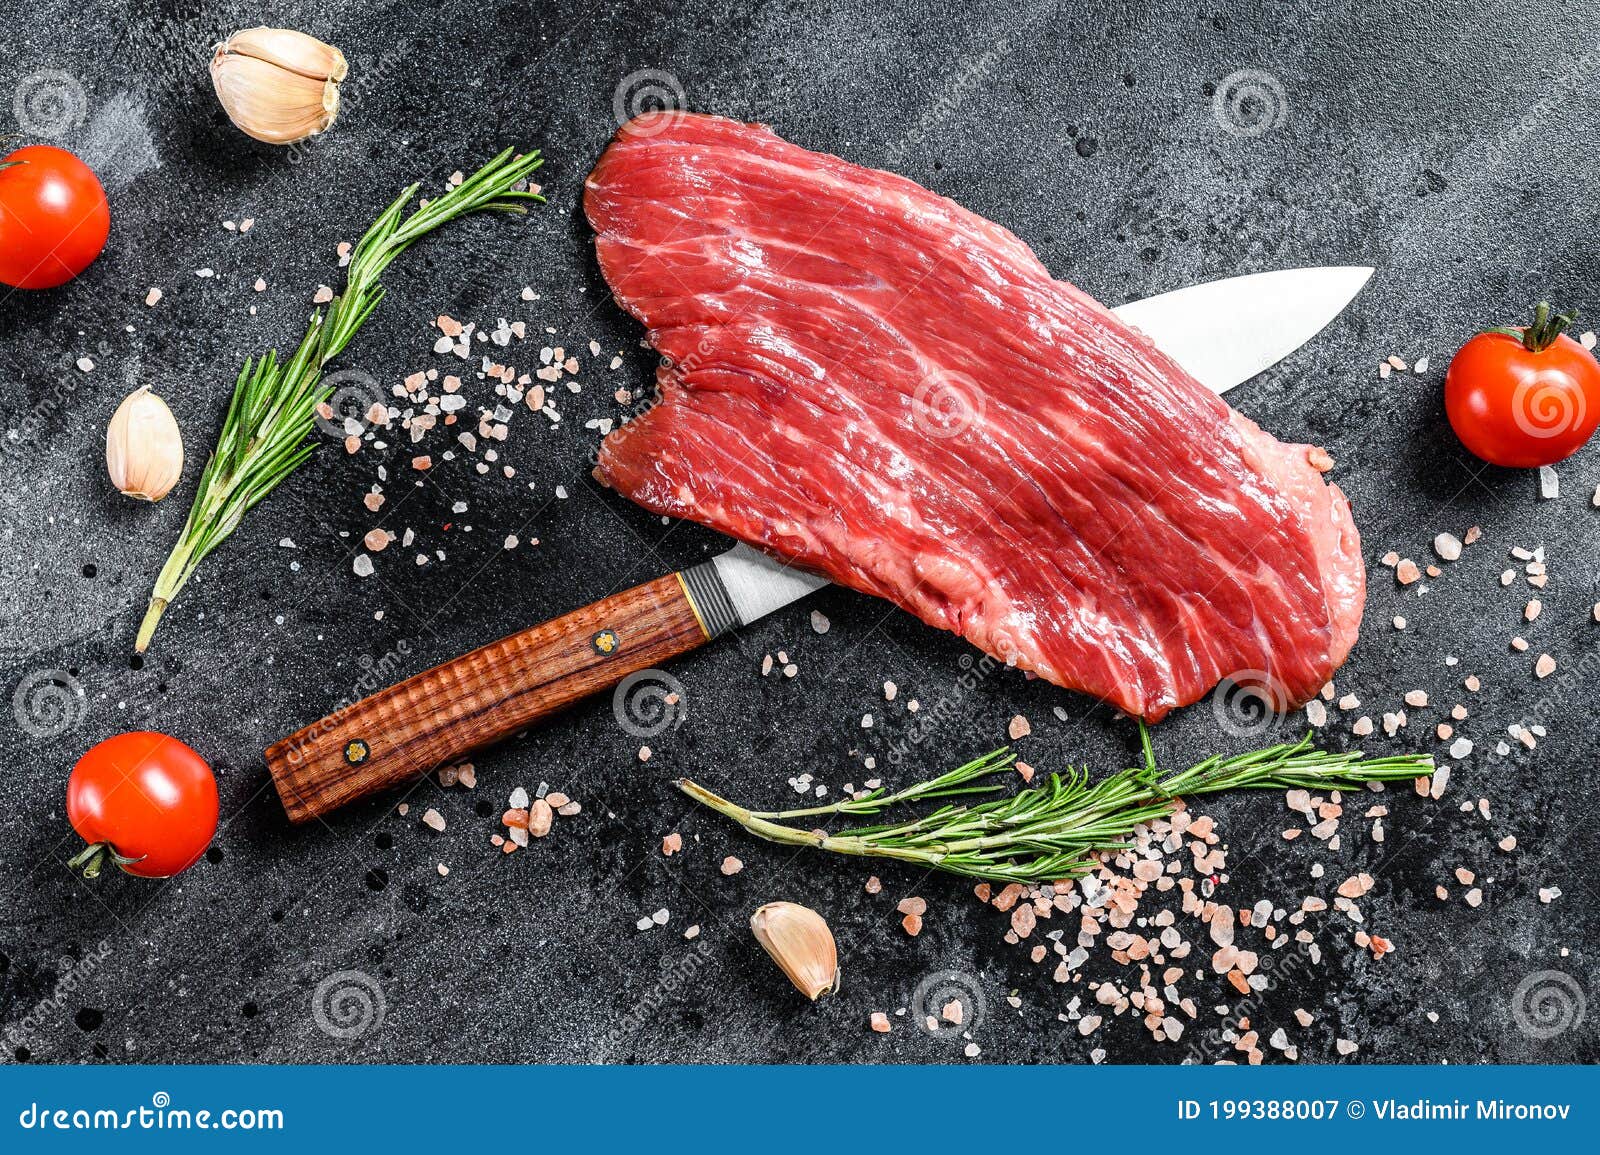 raw flank steak black angus. fresh marble beef meat. black background. top view